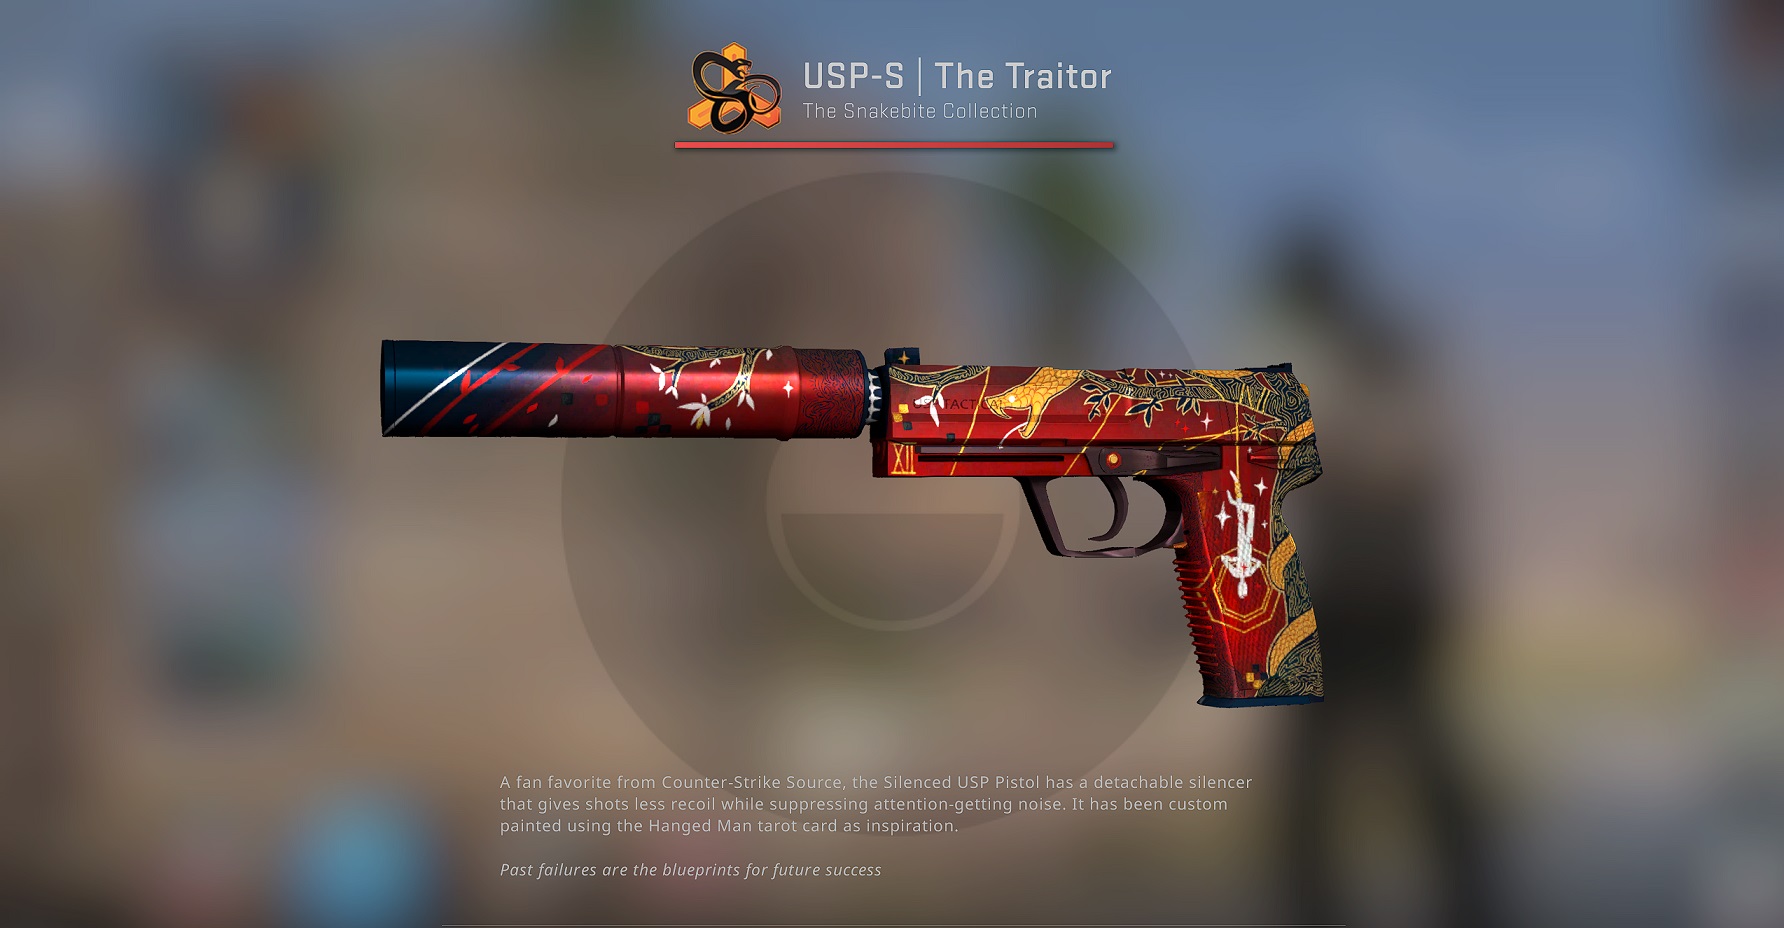 USP-S The Traito CS: GO skin, red and gold, screenshot.